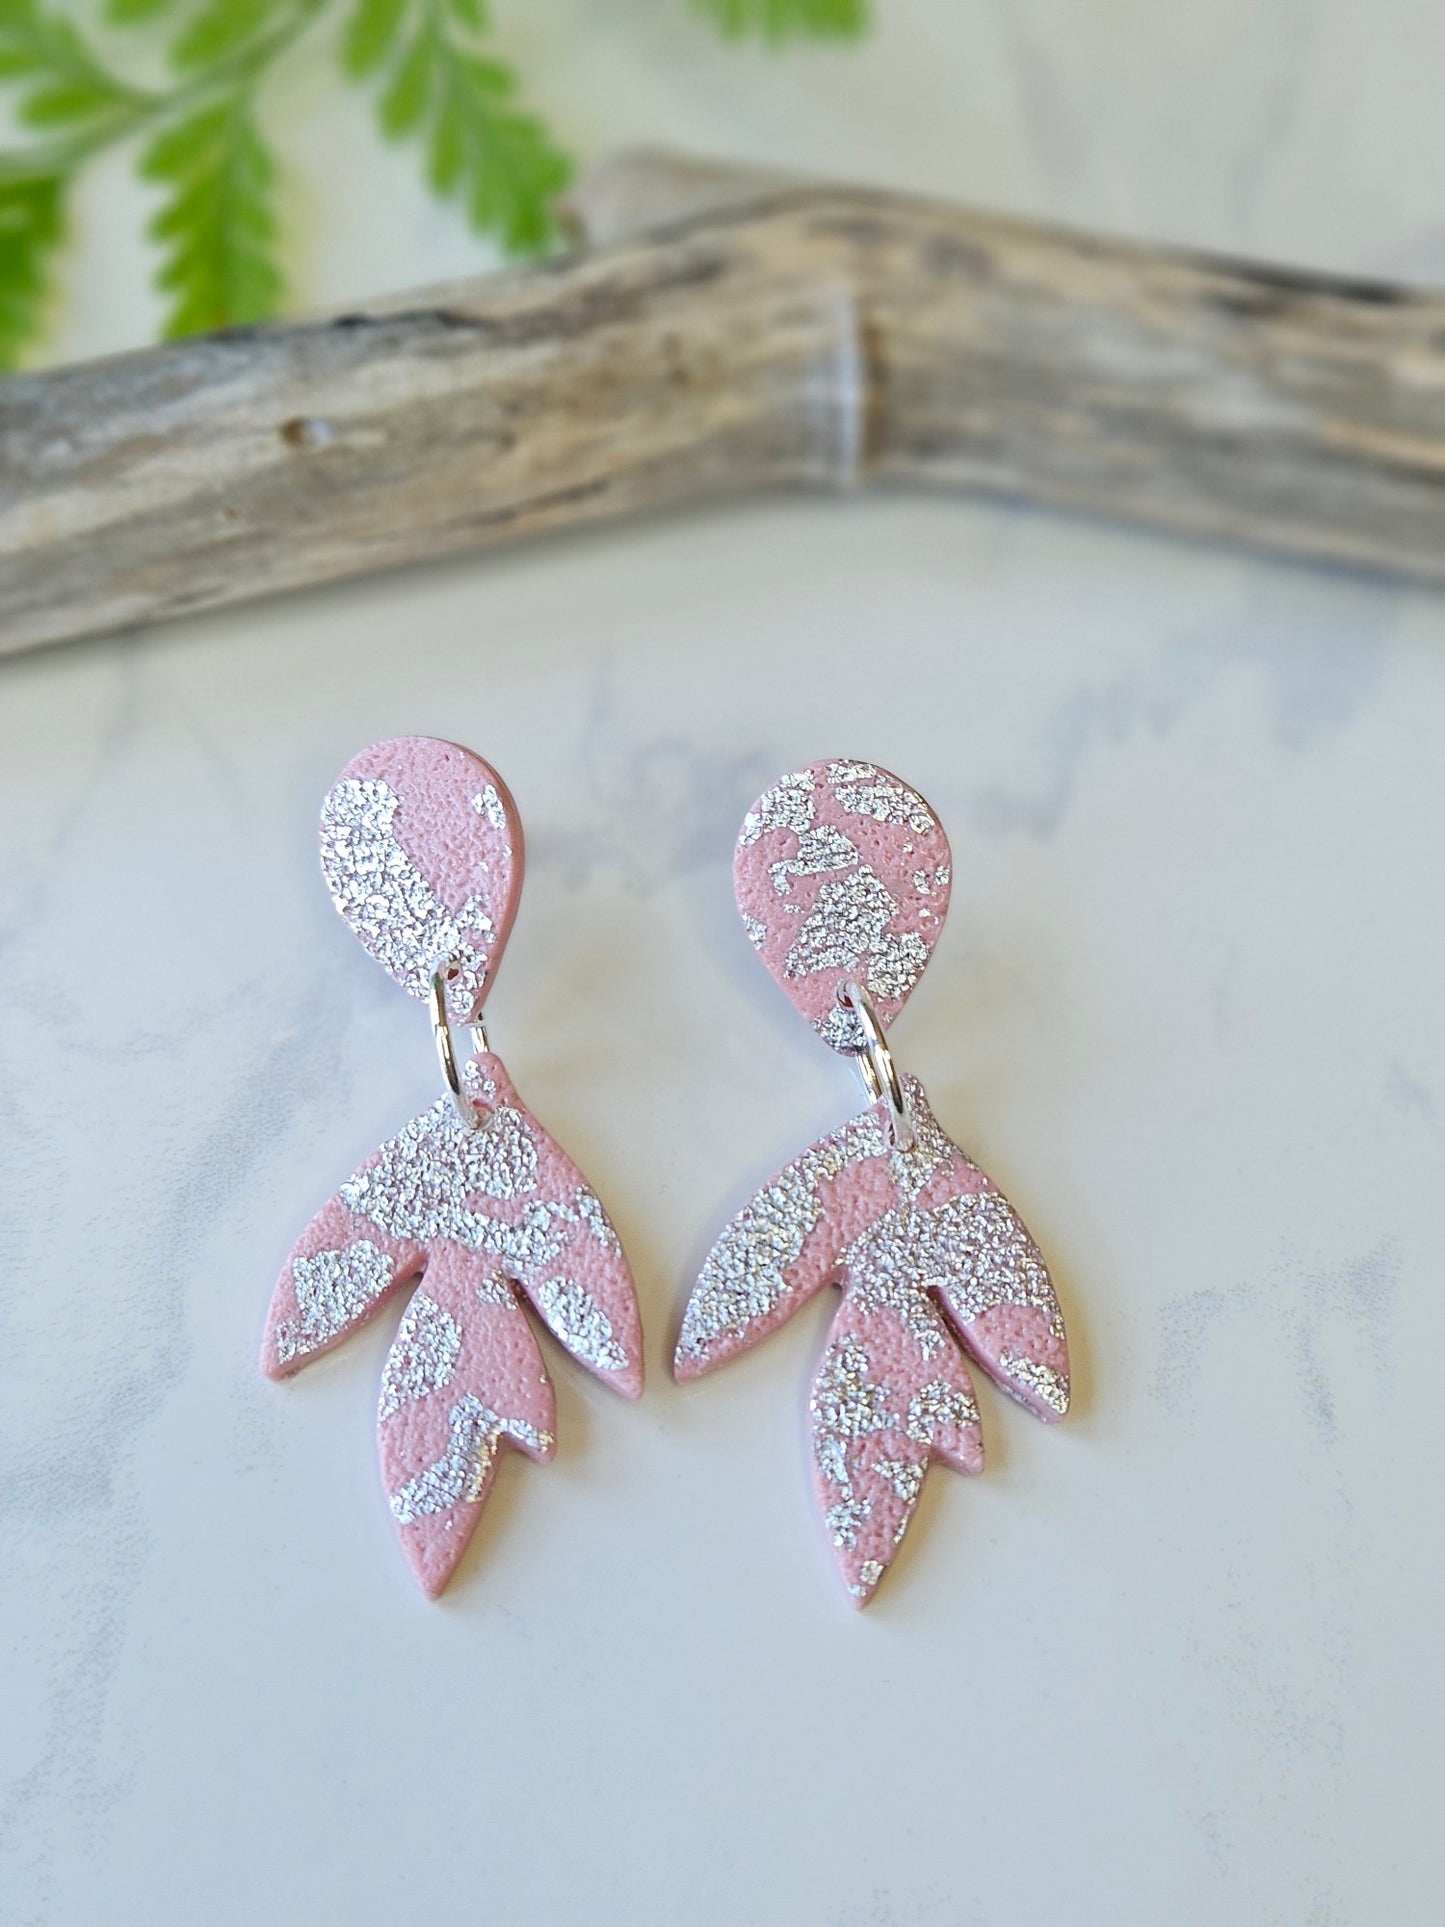 Earring dangles - pink sparkle leaves